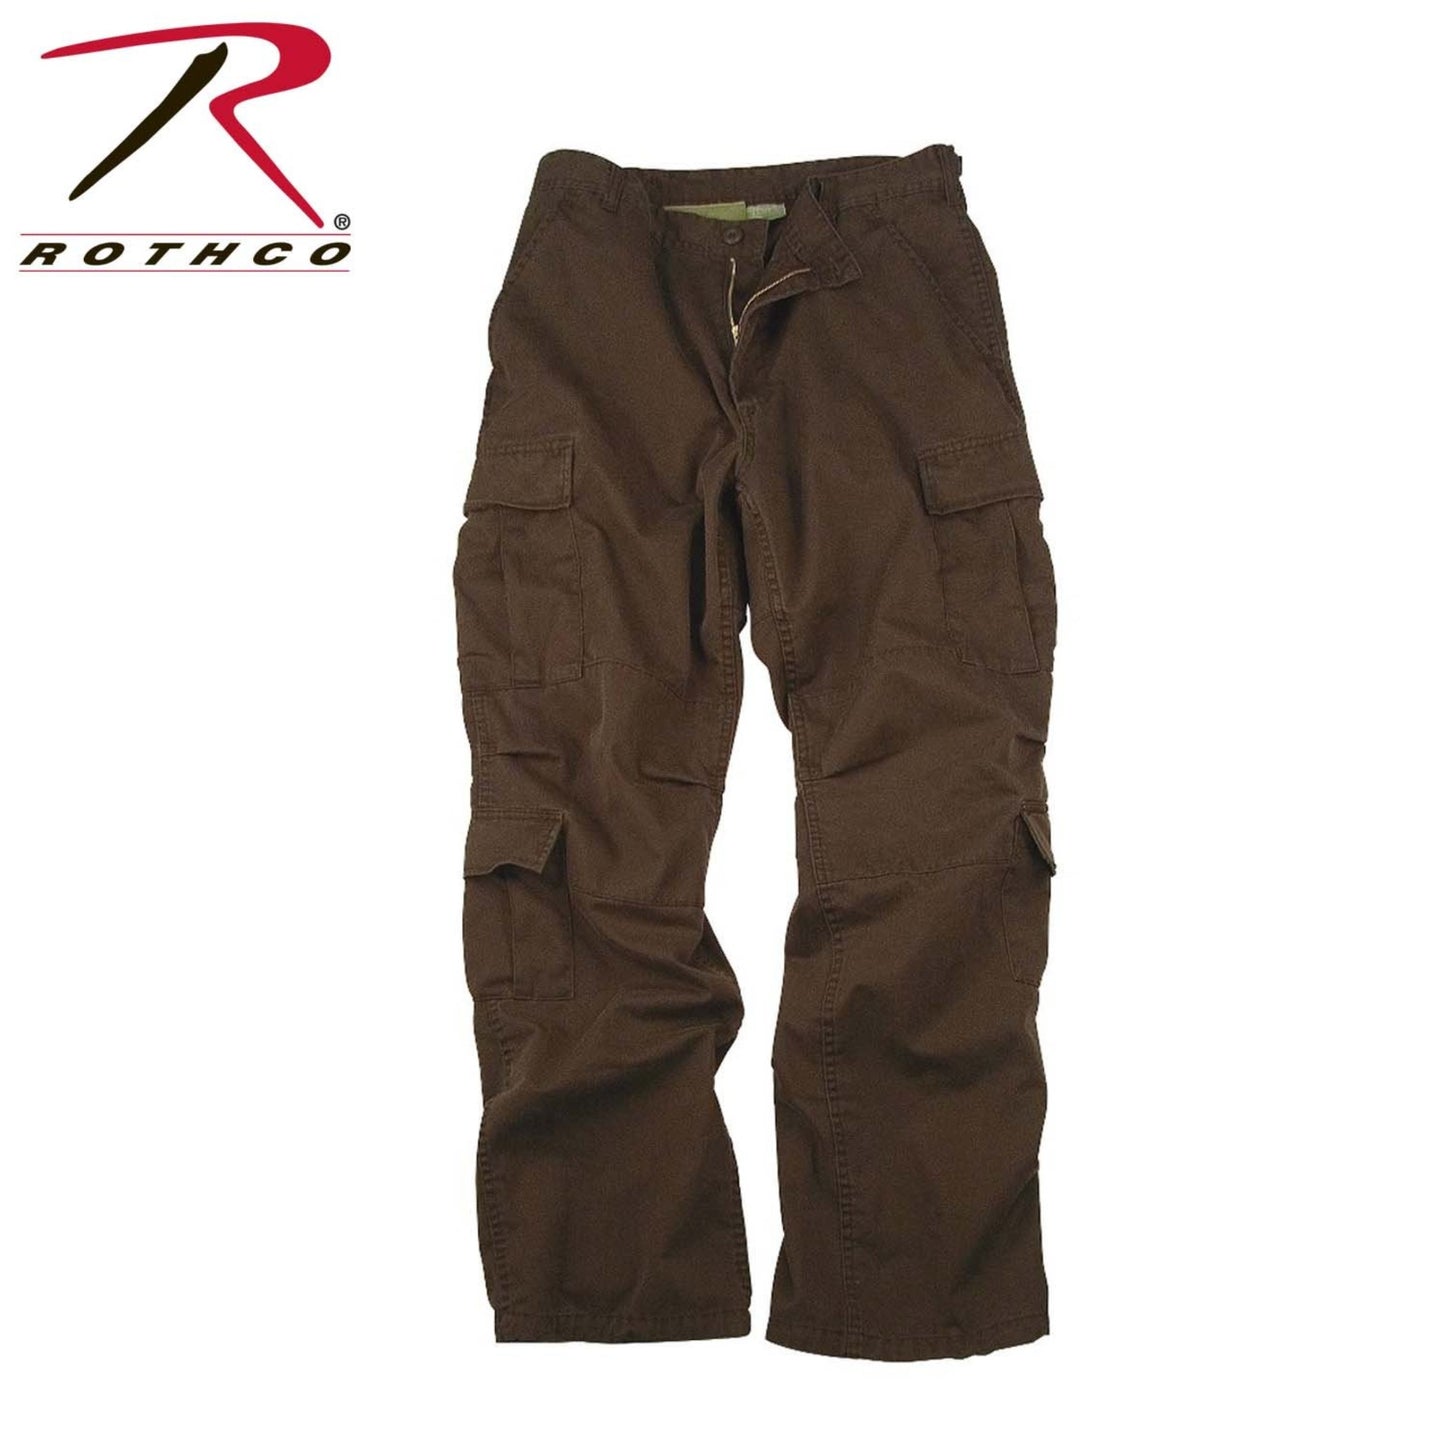 Paratrooper Fatigue Pants, Vintage Style